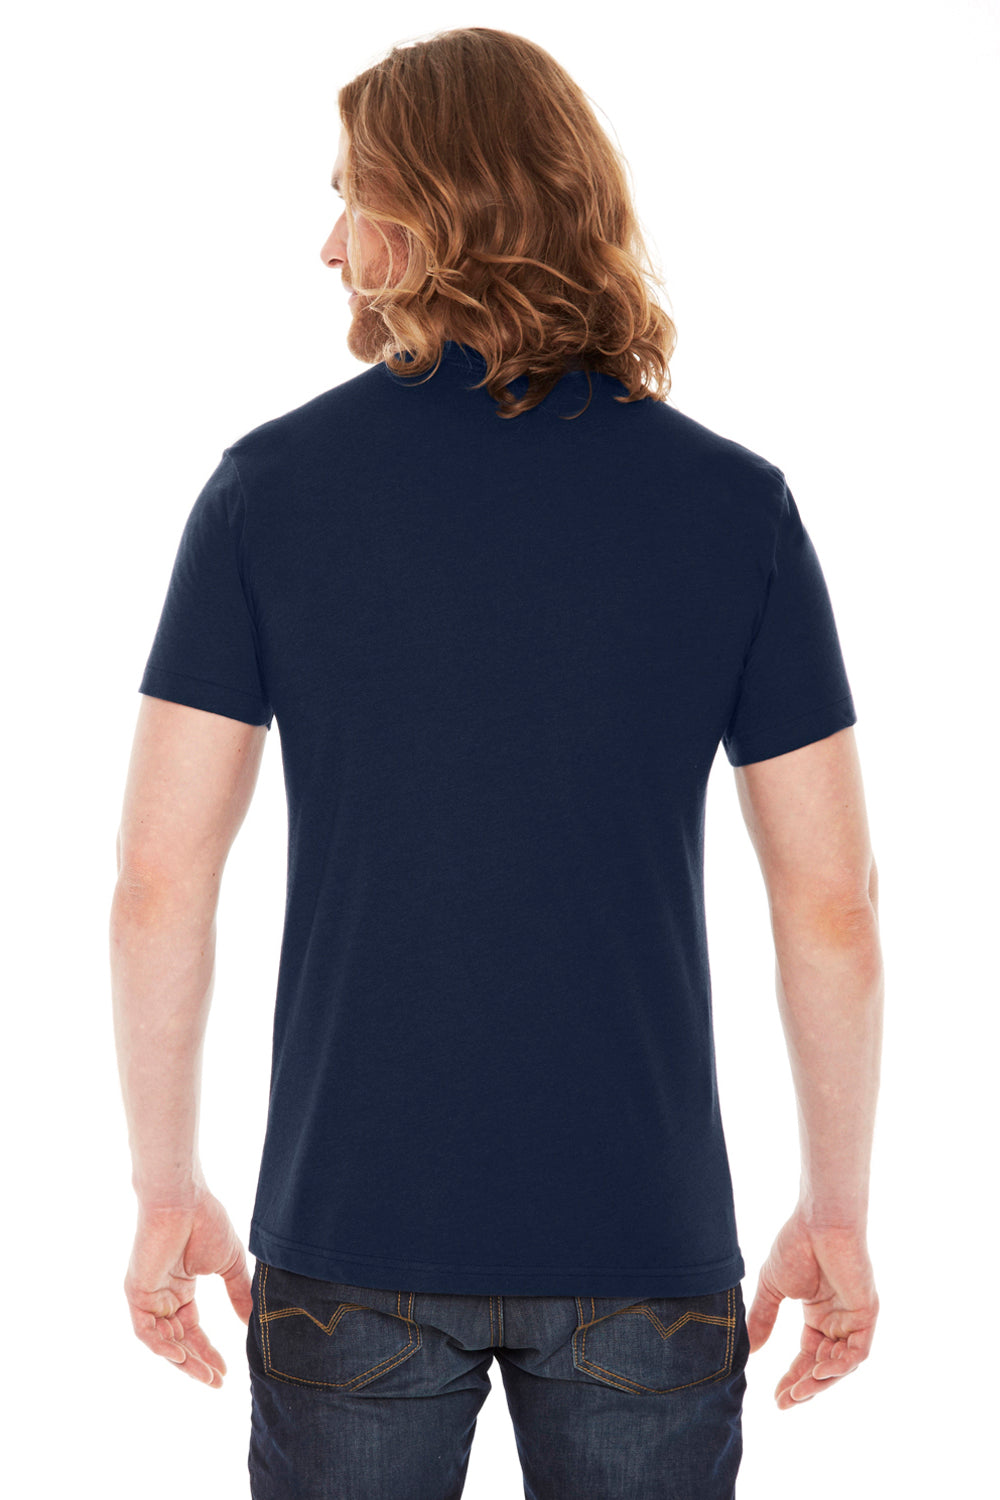 American Apparel BB401 Mens USA Made Short Sleeve Crewneck T-Shirt Navy Blue Back